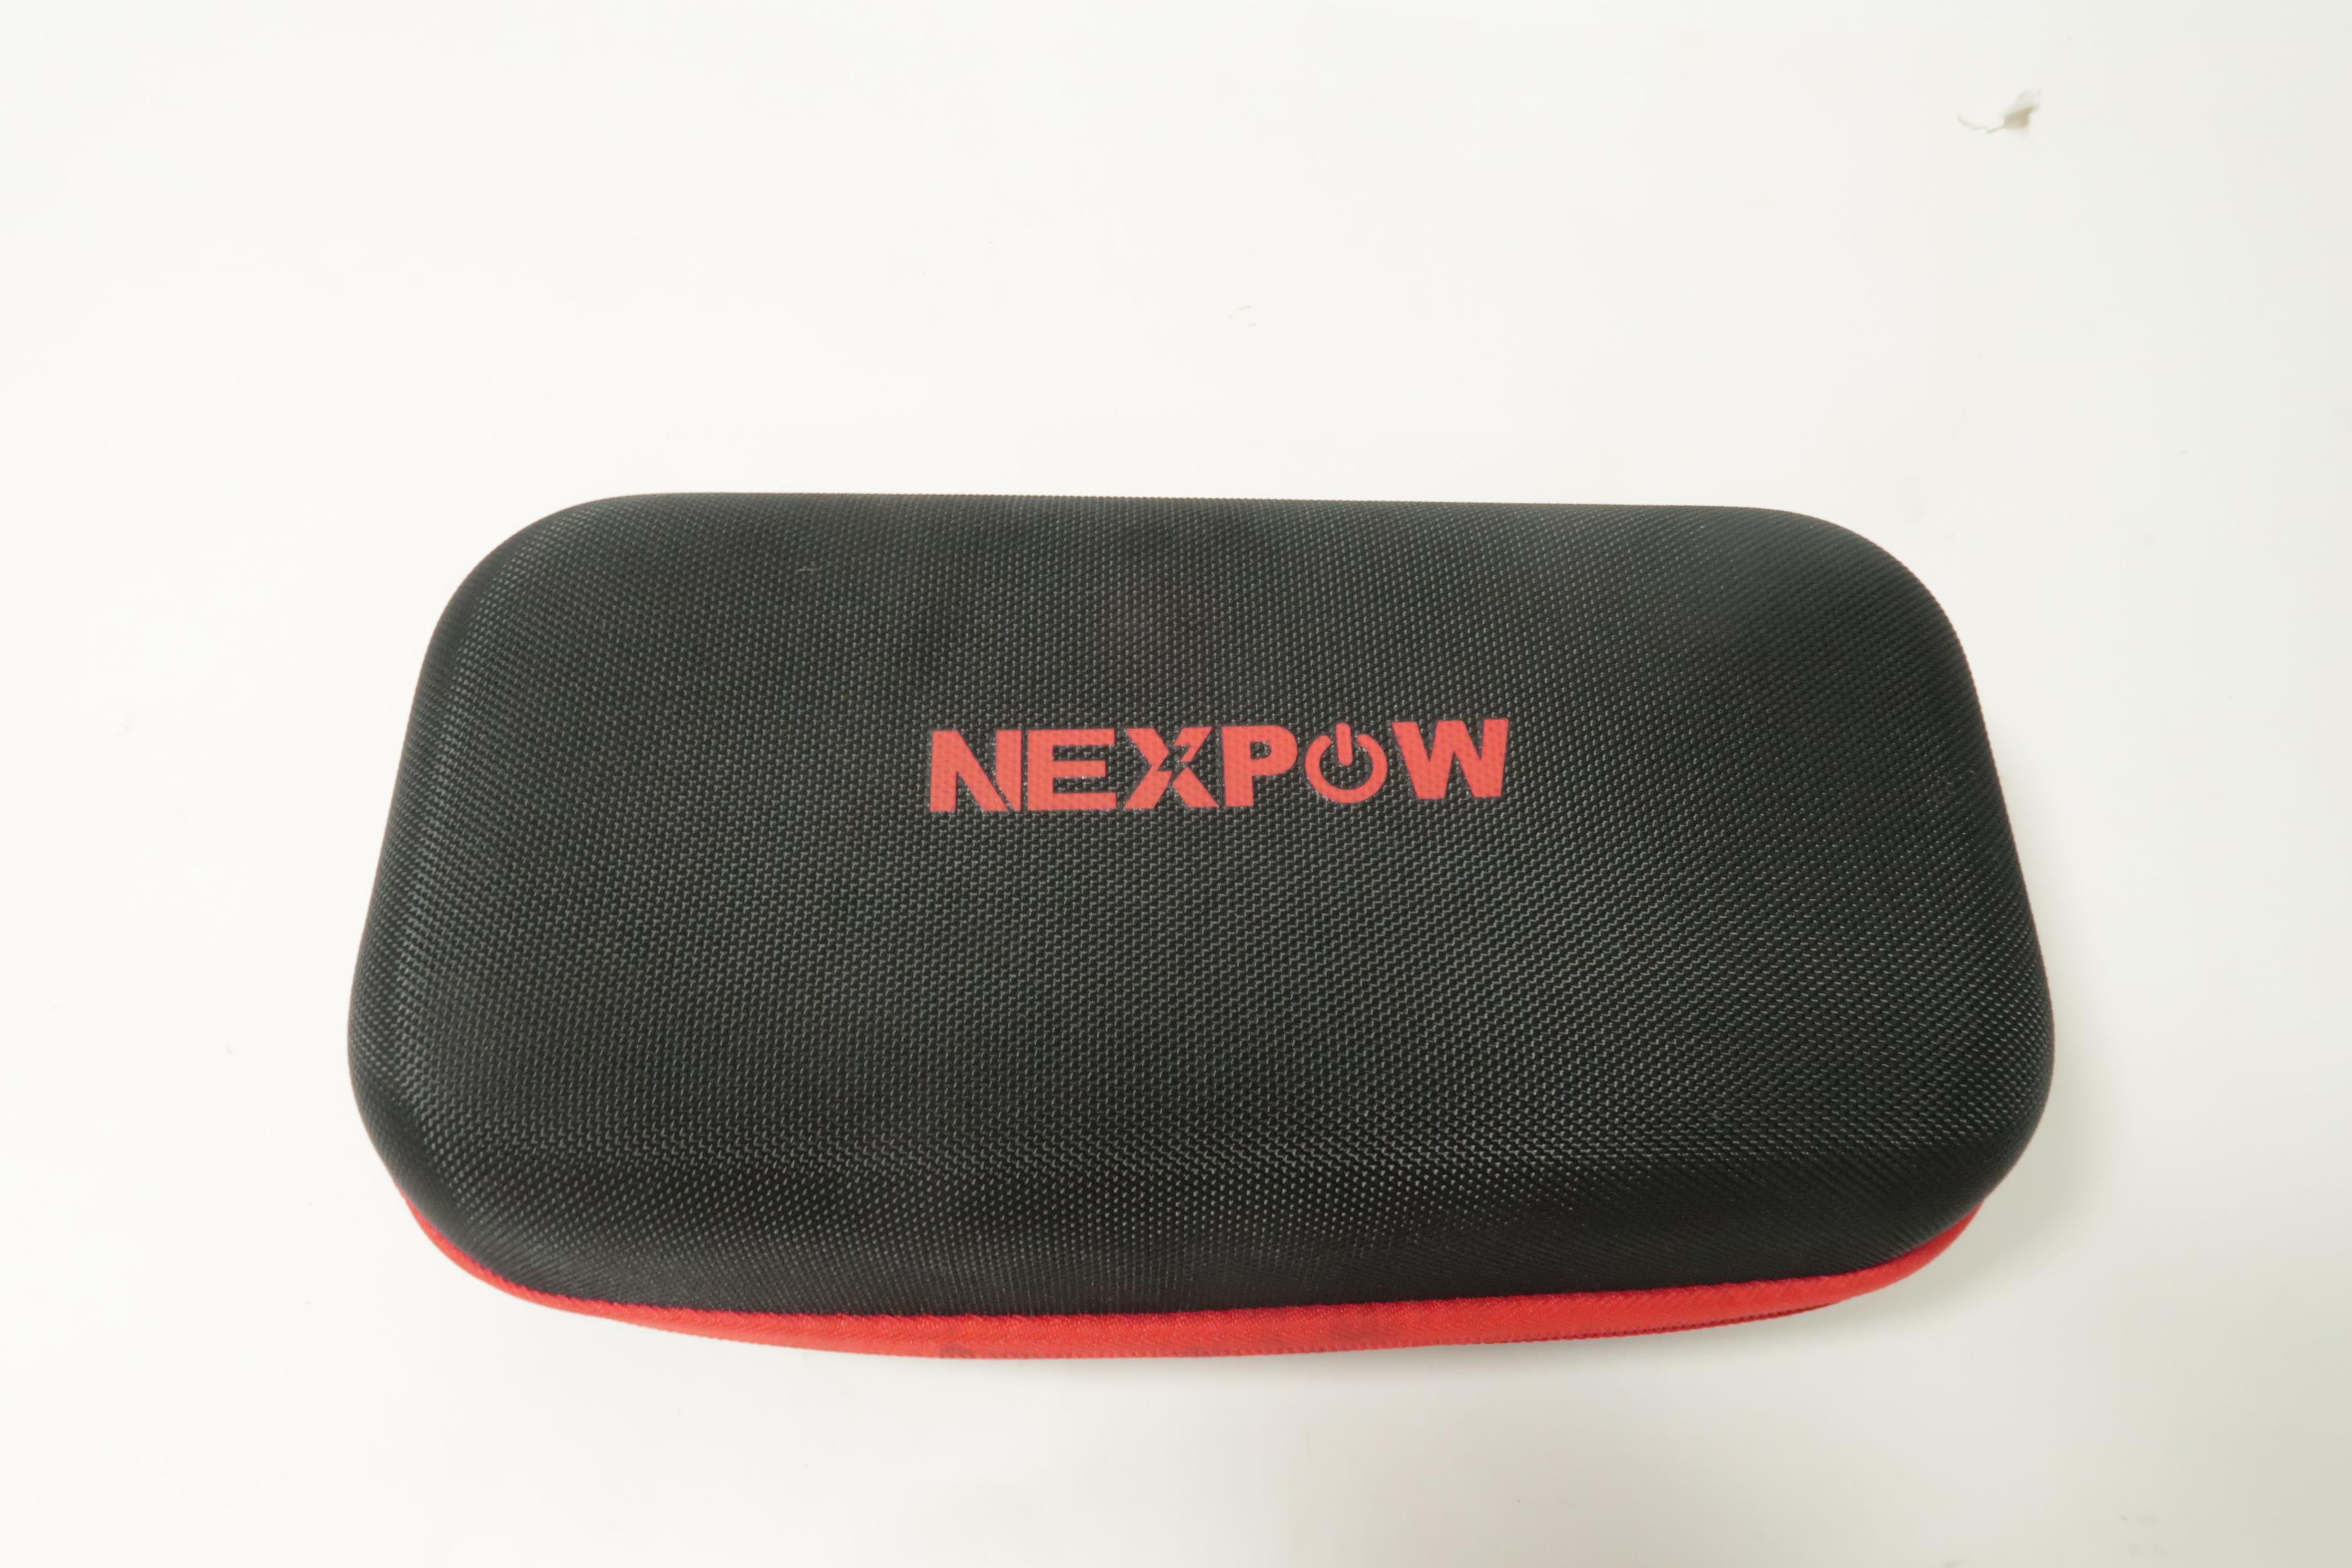 Nexpow Car Jump Starter, 1500A Peak 21800mAh 12V Portable Battery Jump  Starter